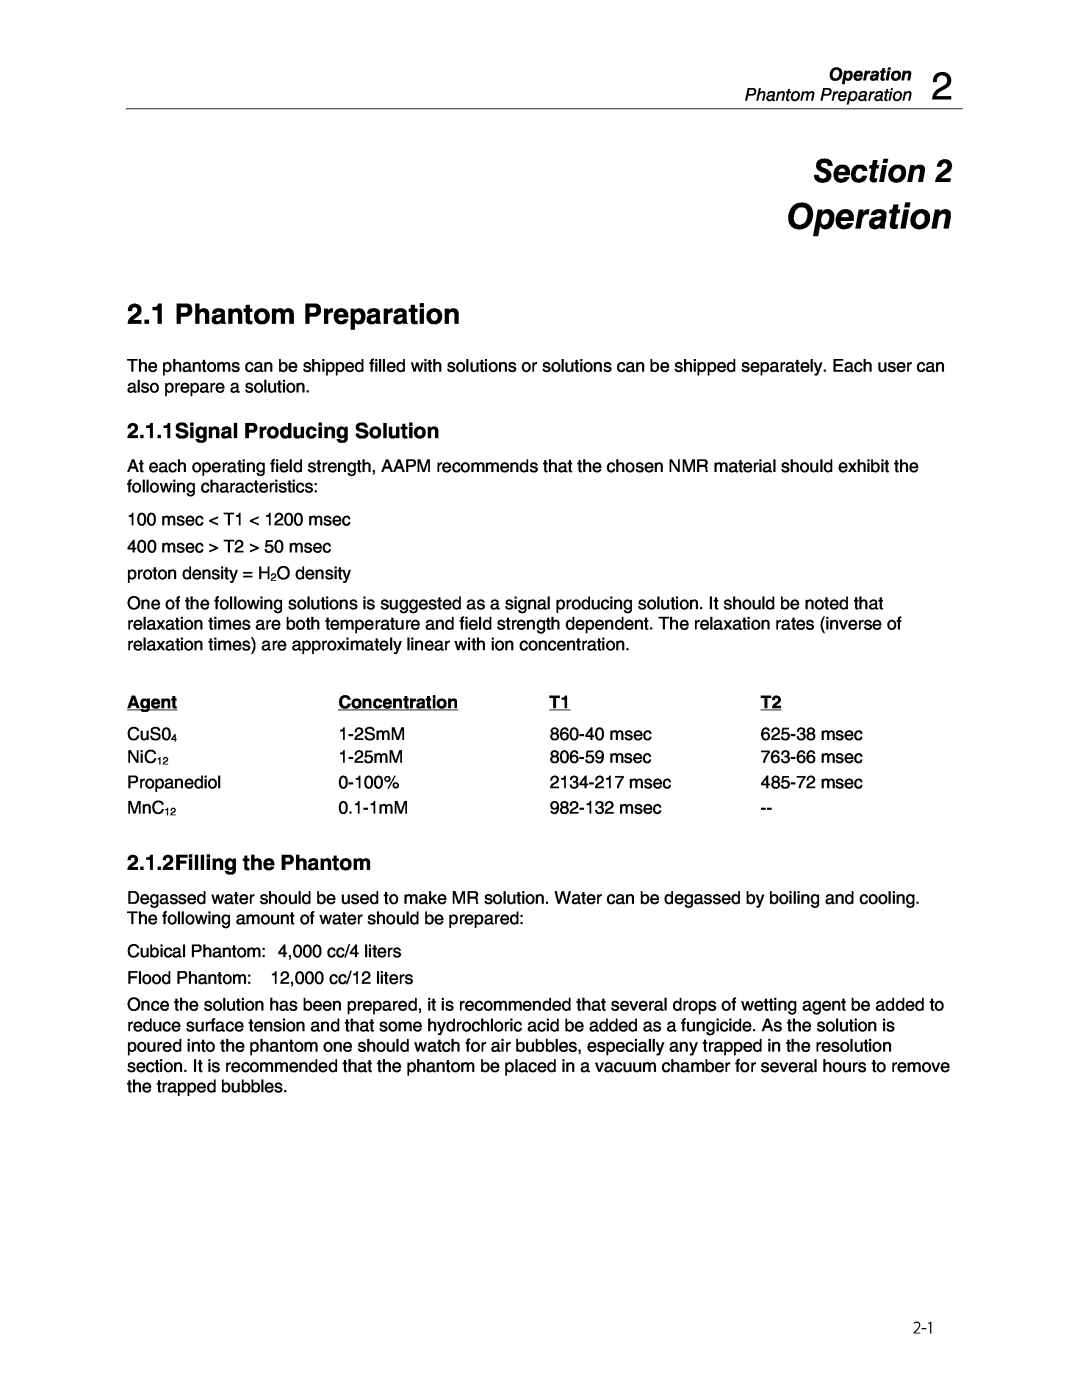 Fluke 76-907 Operation, Phantom Preparation, 2.1.1Signal Producing Solution, 2.1.2Filling the Phantom, Section, Agent 